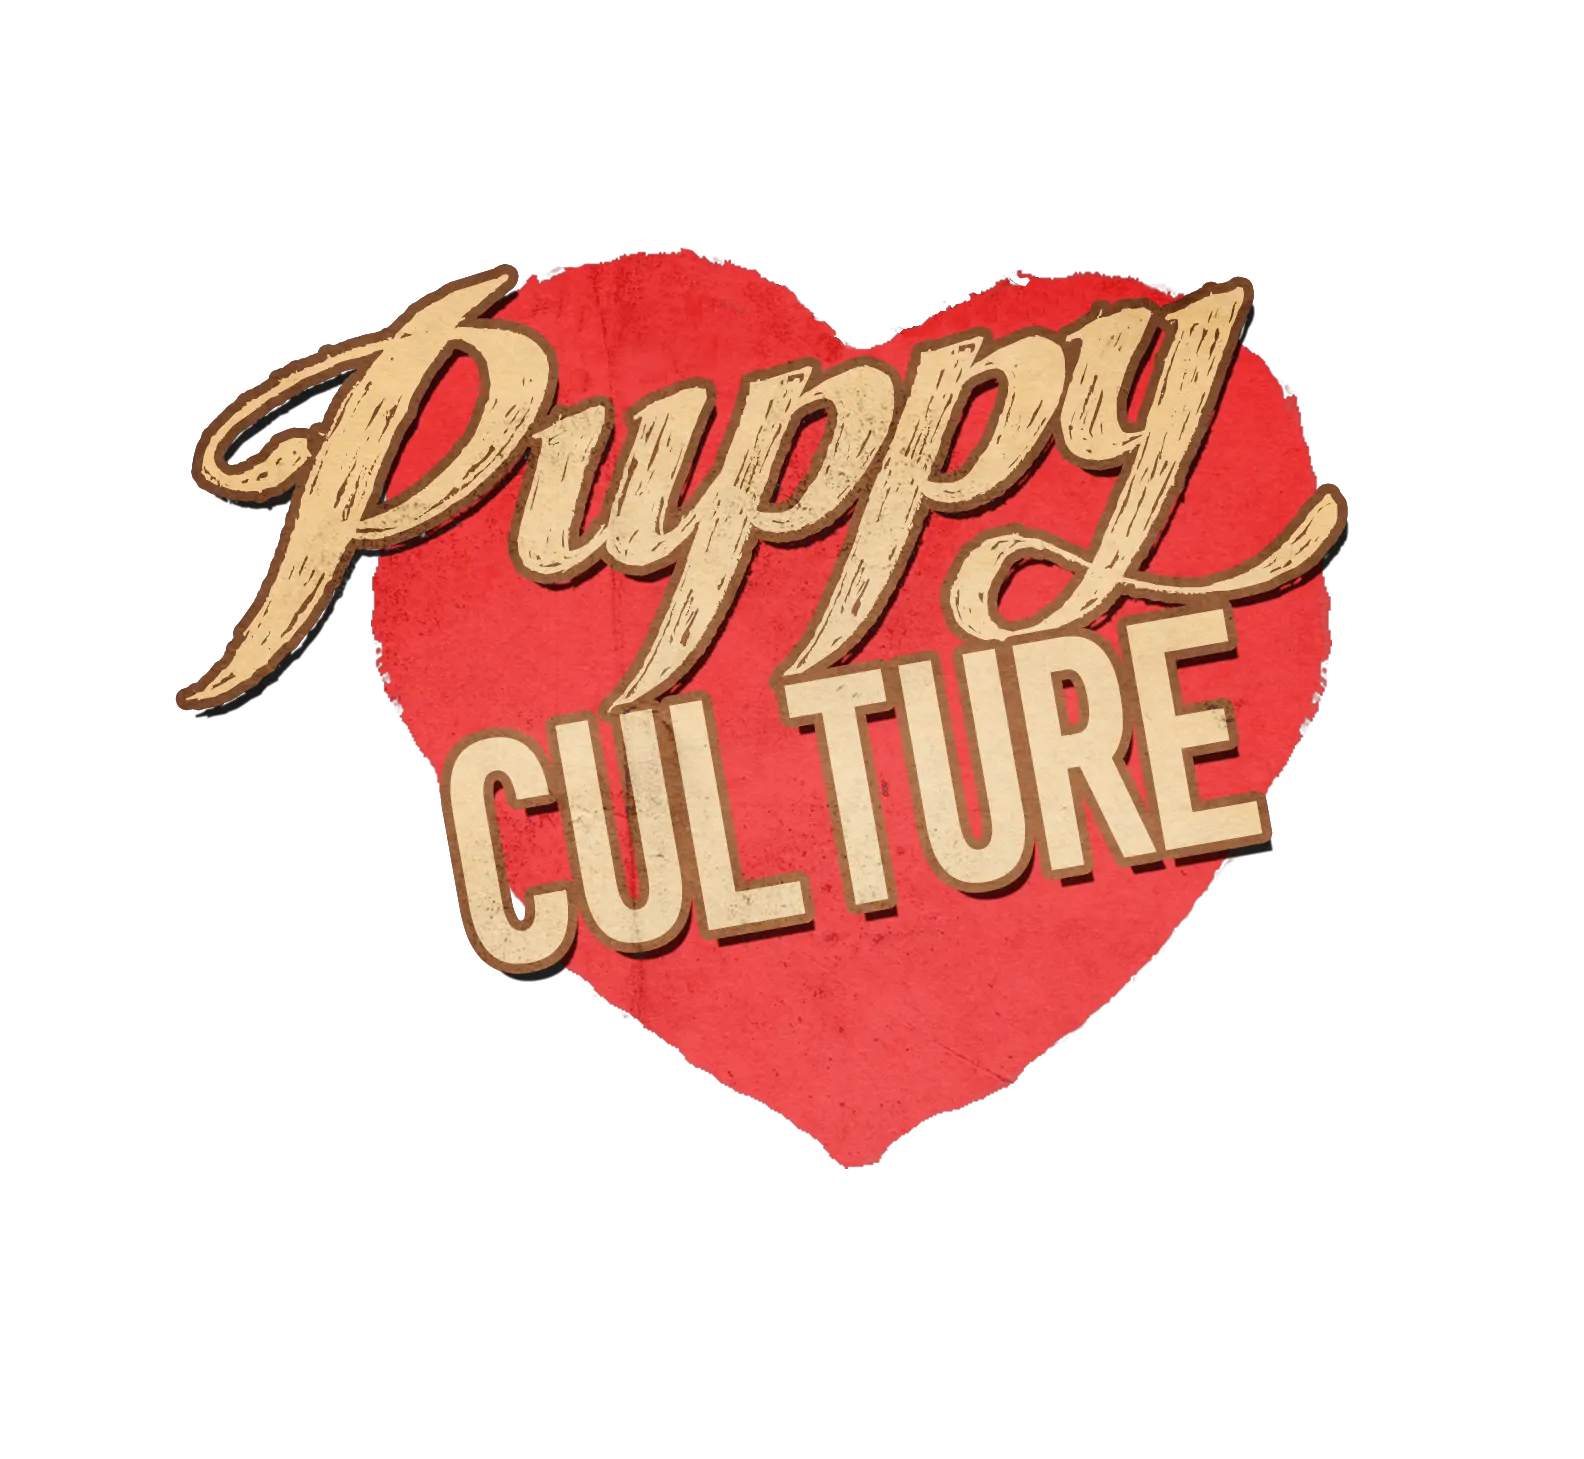 Space Coast Doodles uses Puppy Culture Curriculum